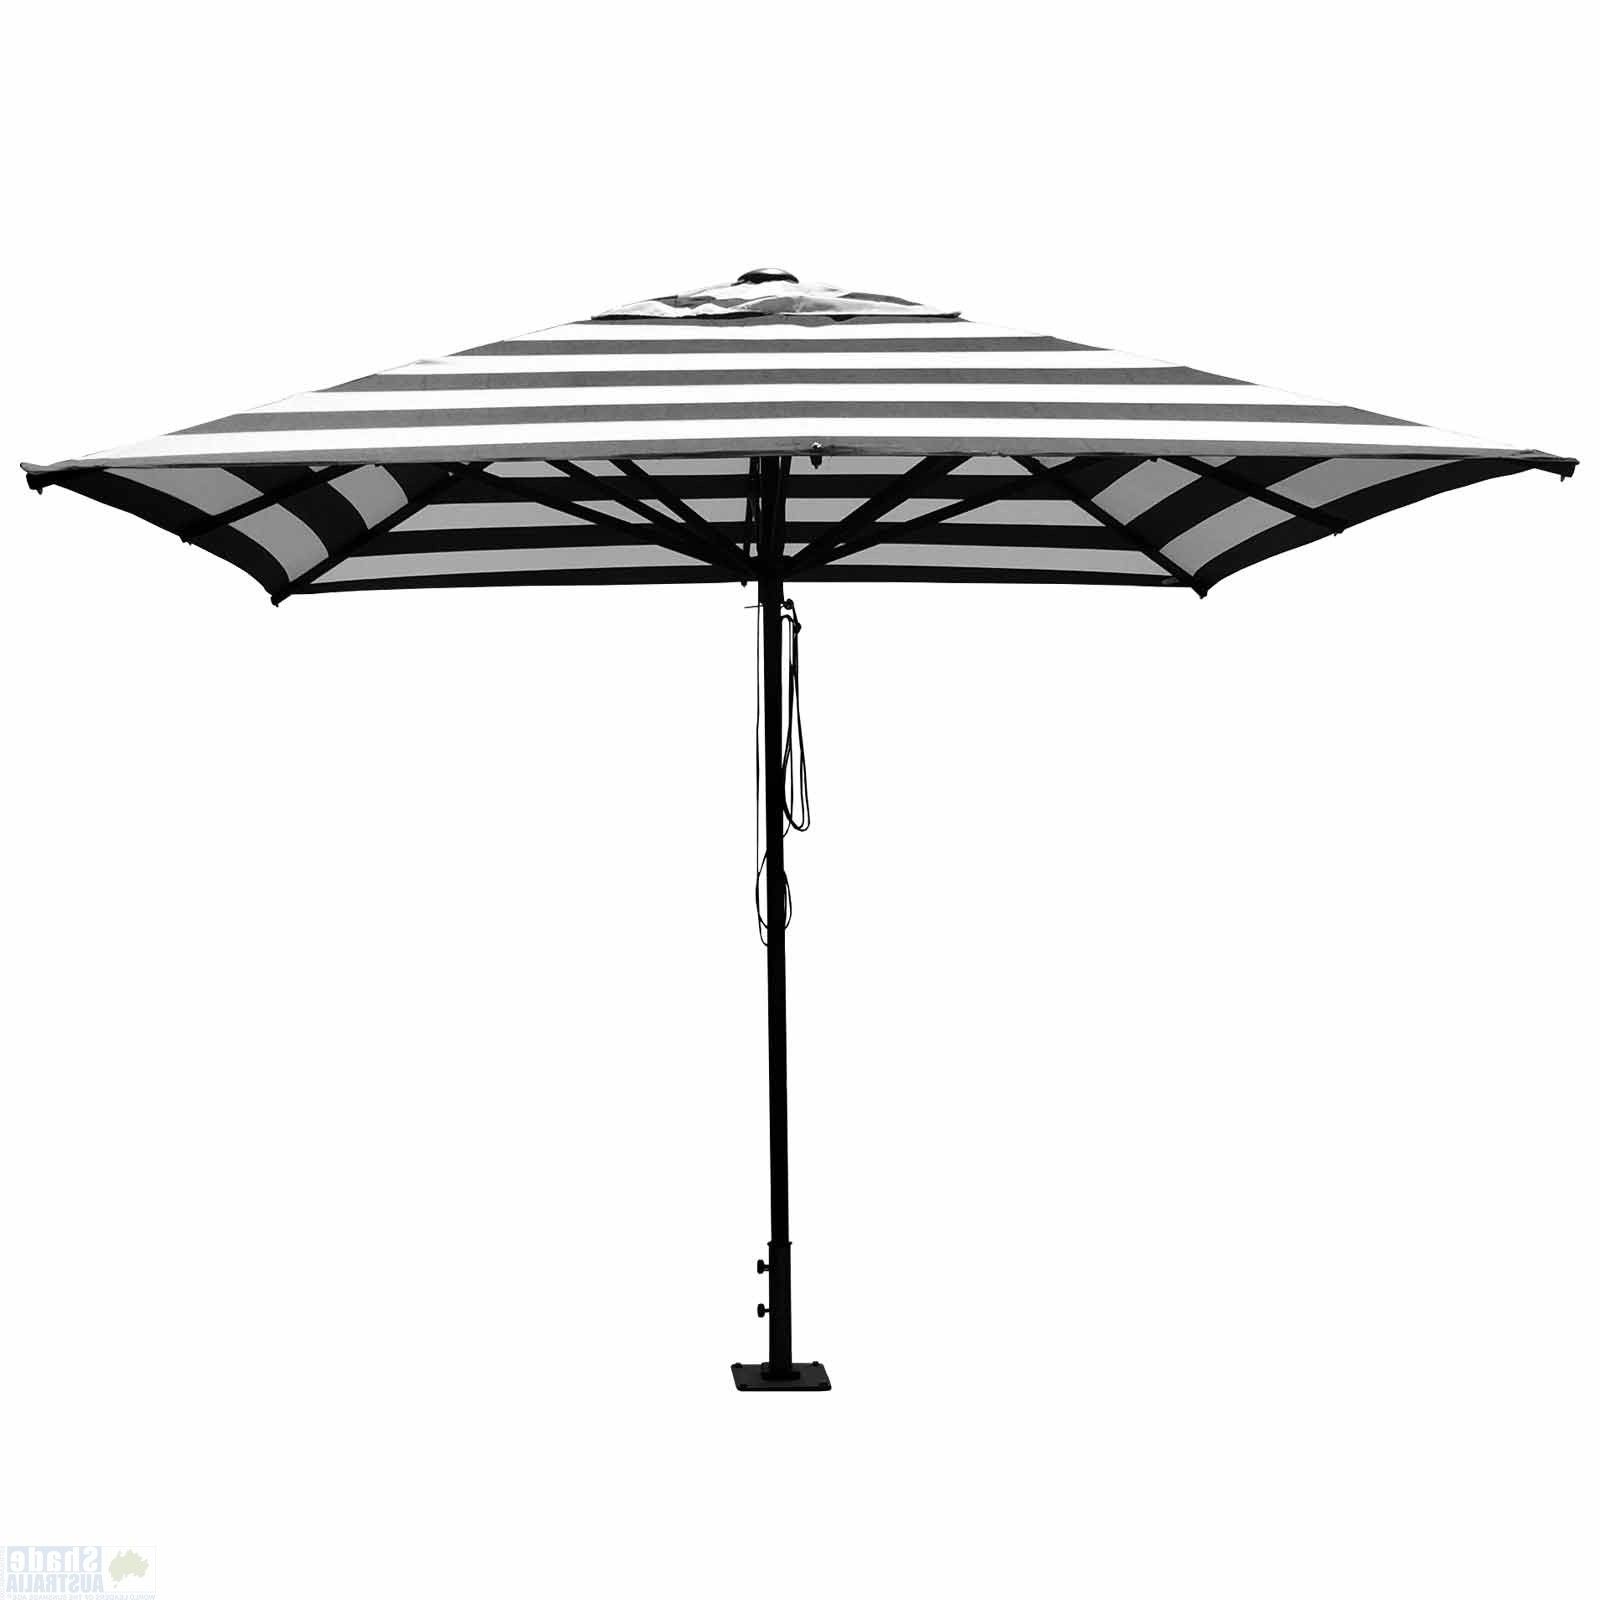 Sunranger "soho" Market Umbrella For Most Current Market Umbrellas (View 1 of 20)